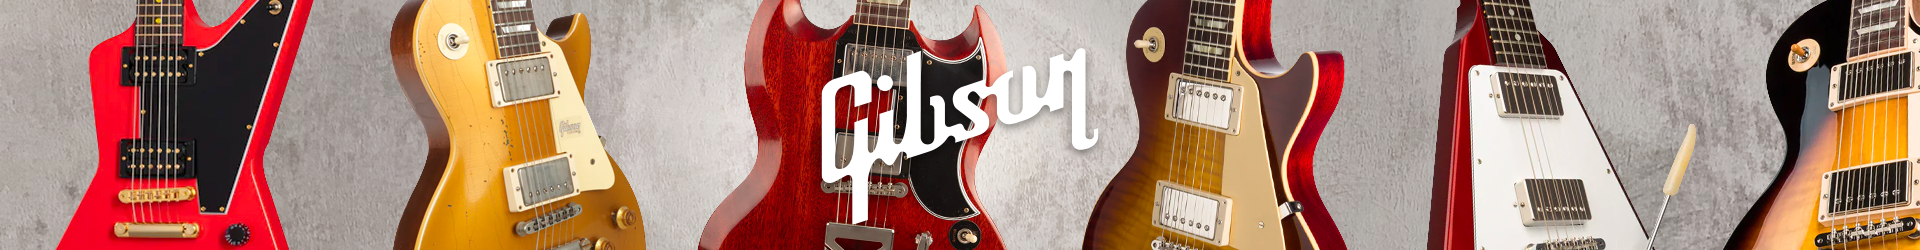 Gibson brand header